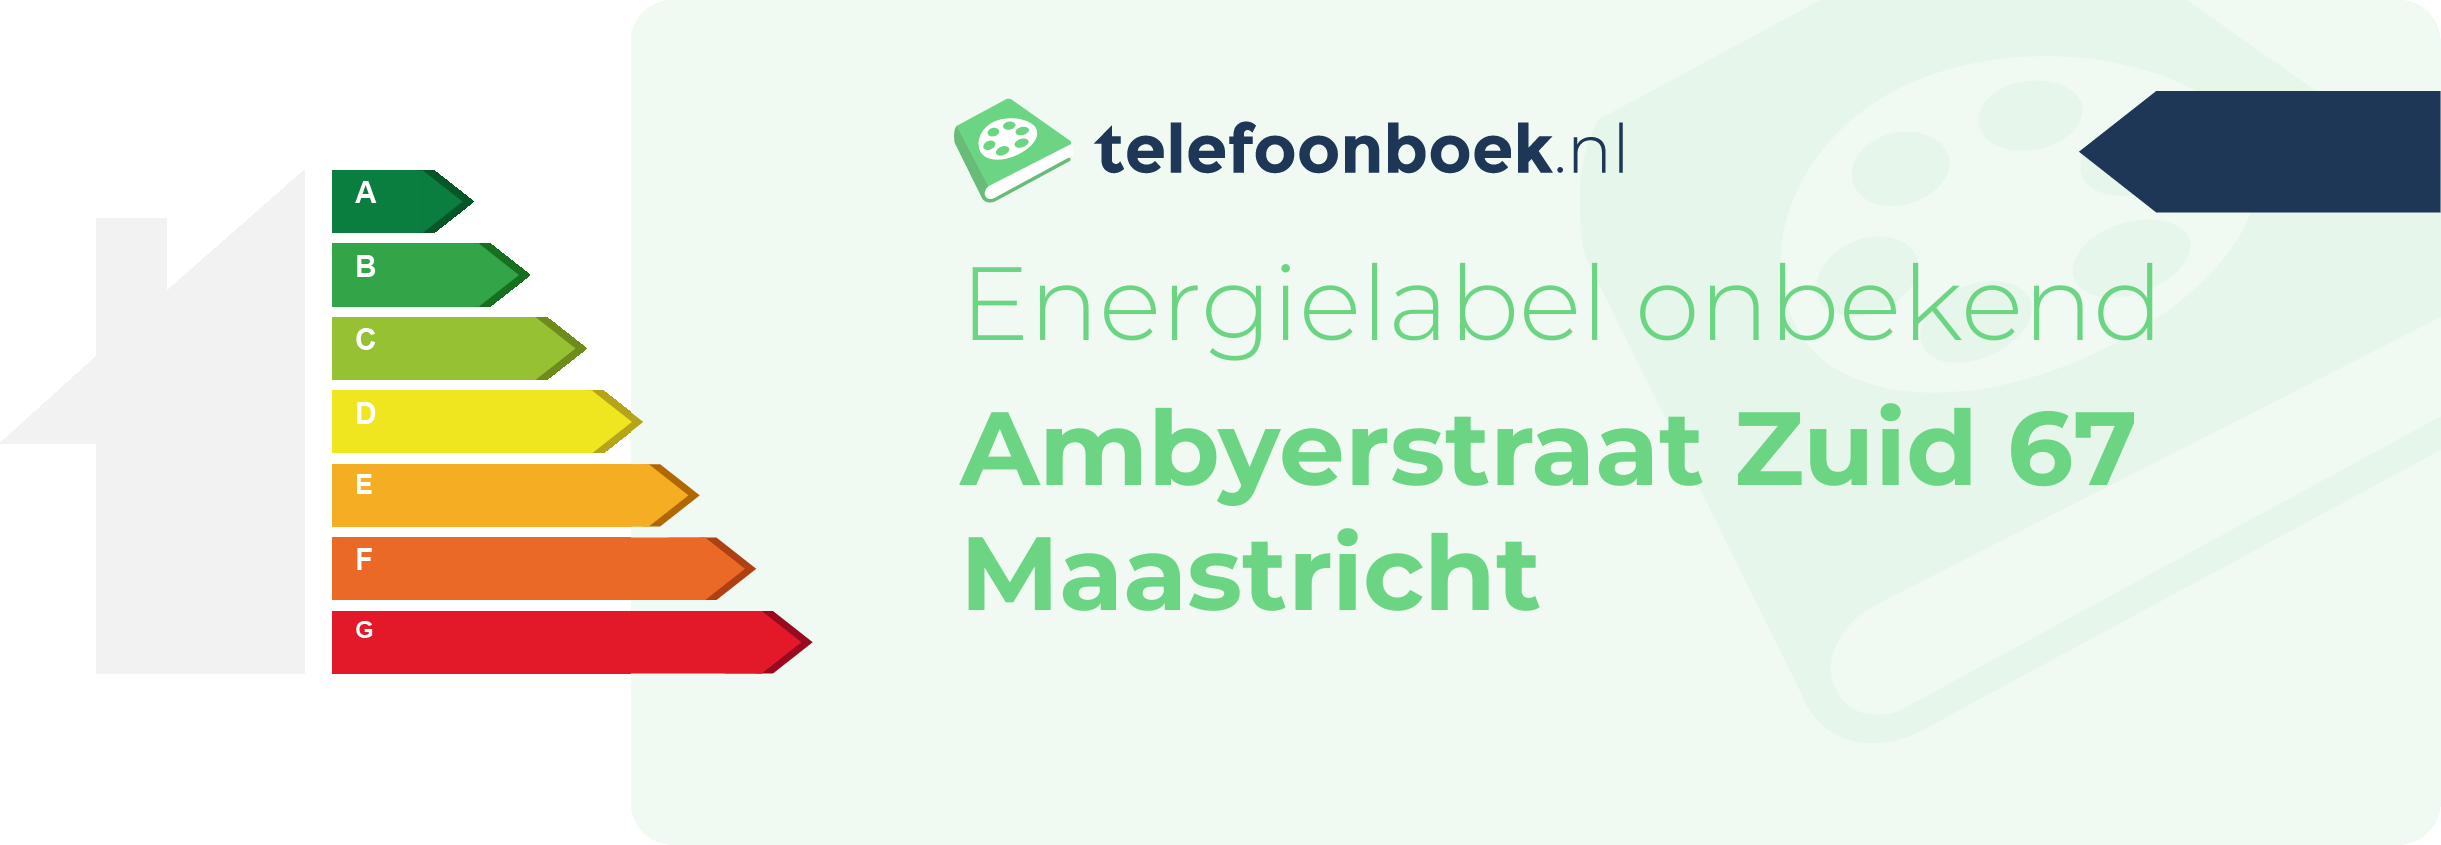 Energielabel Ambyerstraat Zuid 67 Maastricht